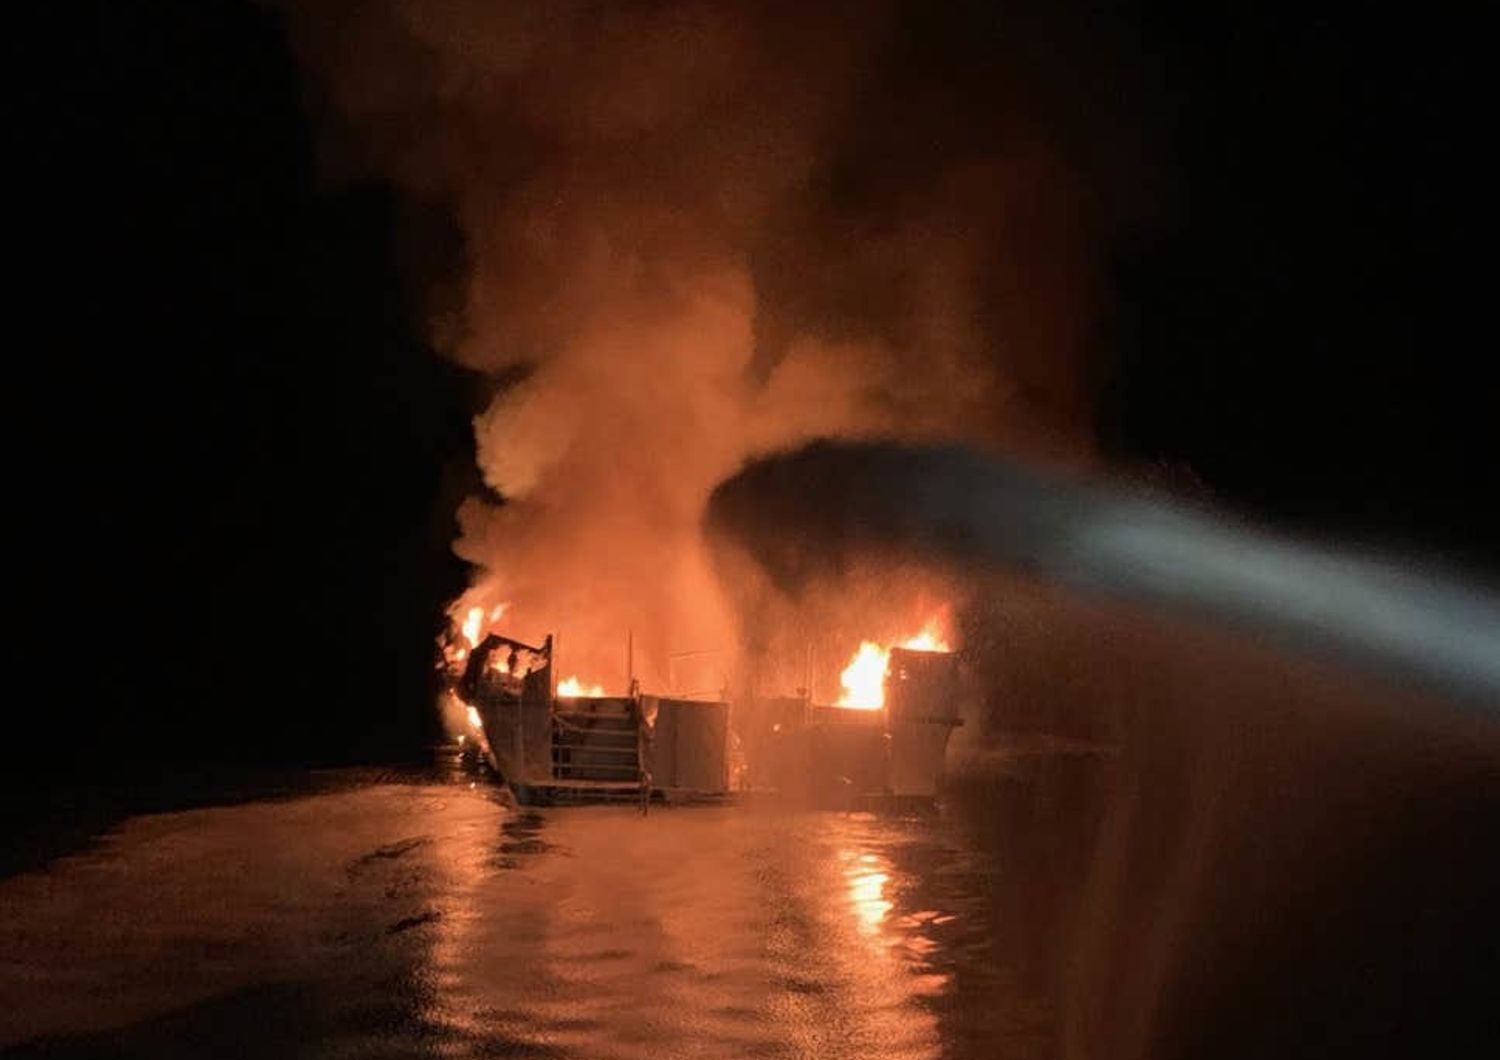 barca in fiamme in california 34 morti